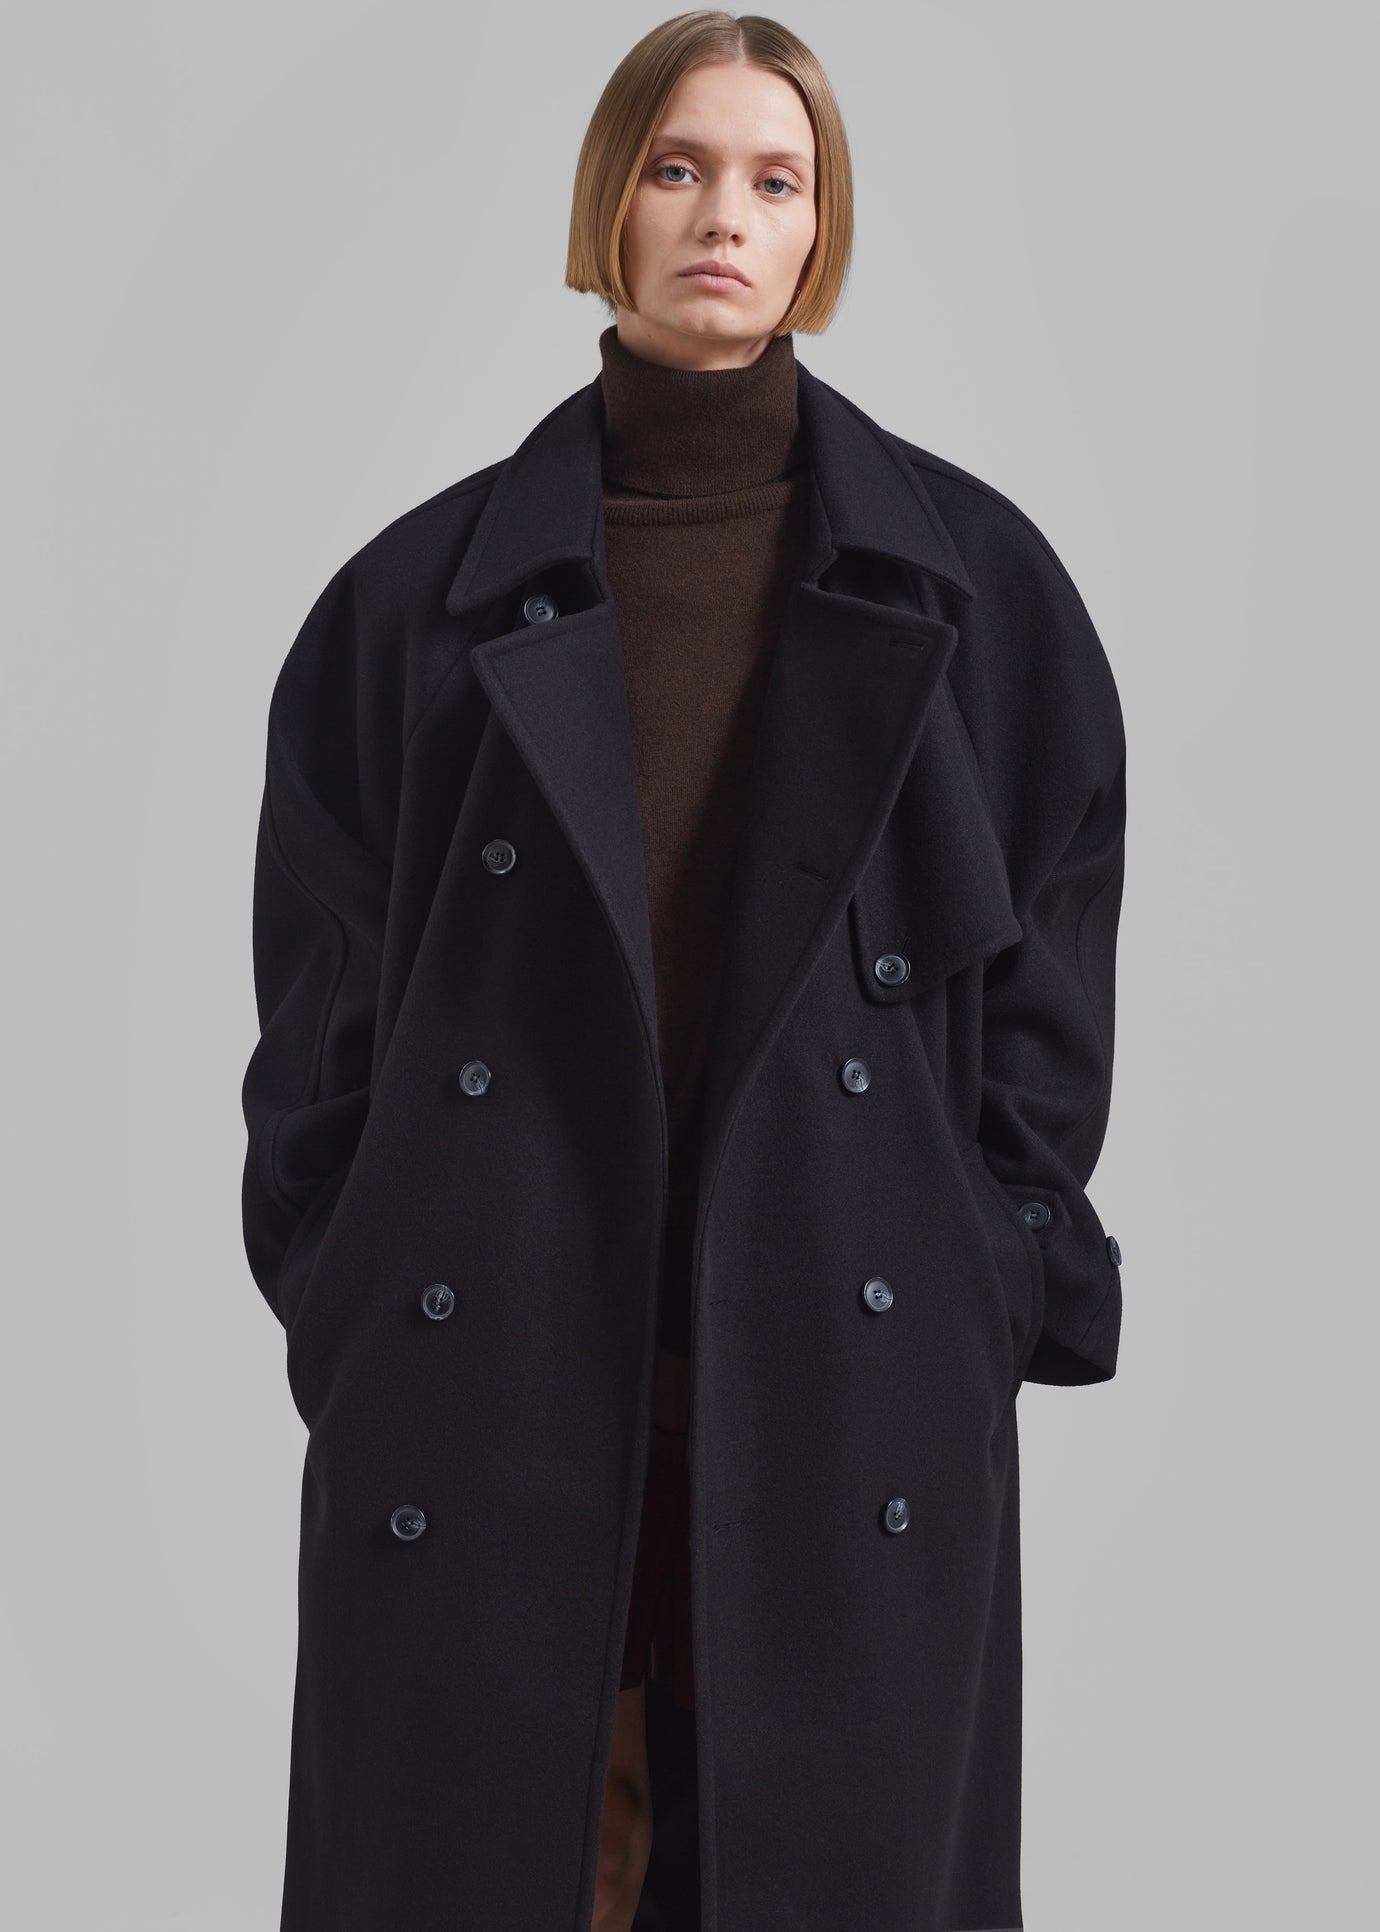 Women's Coats, Jackets, Trench & Blazer – Page 2 – The Frankie Shop